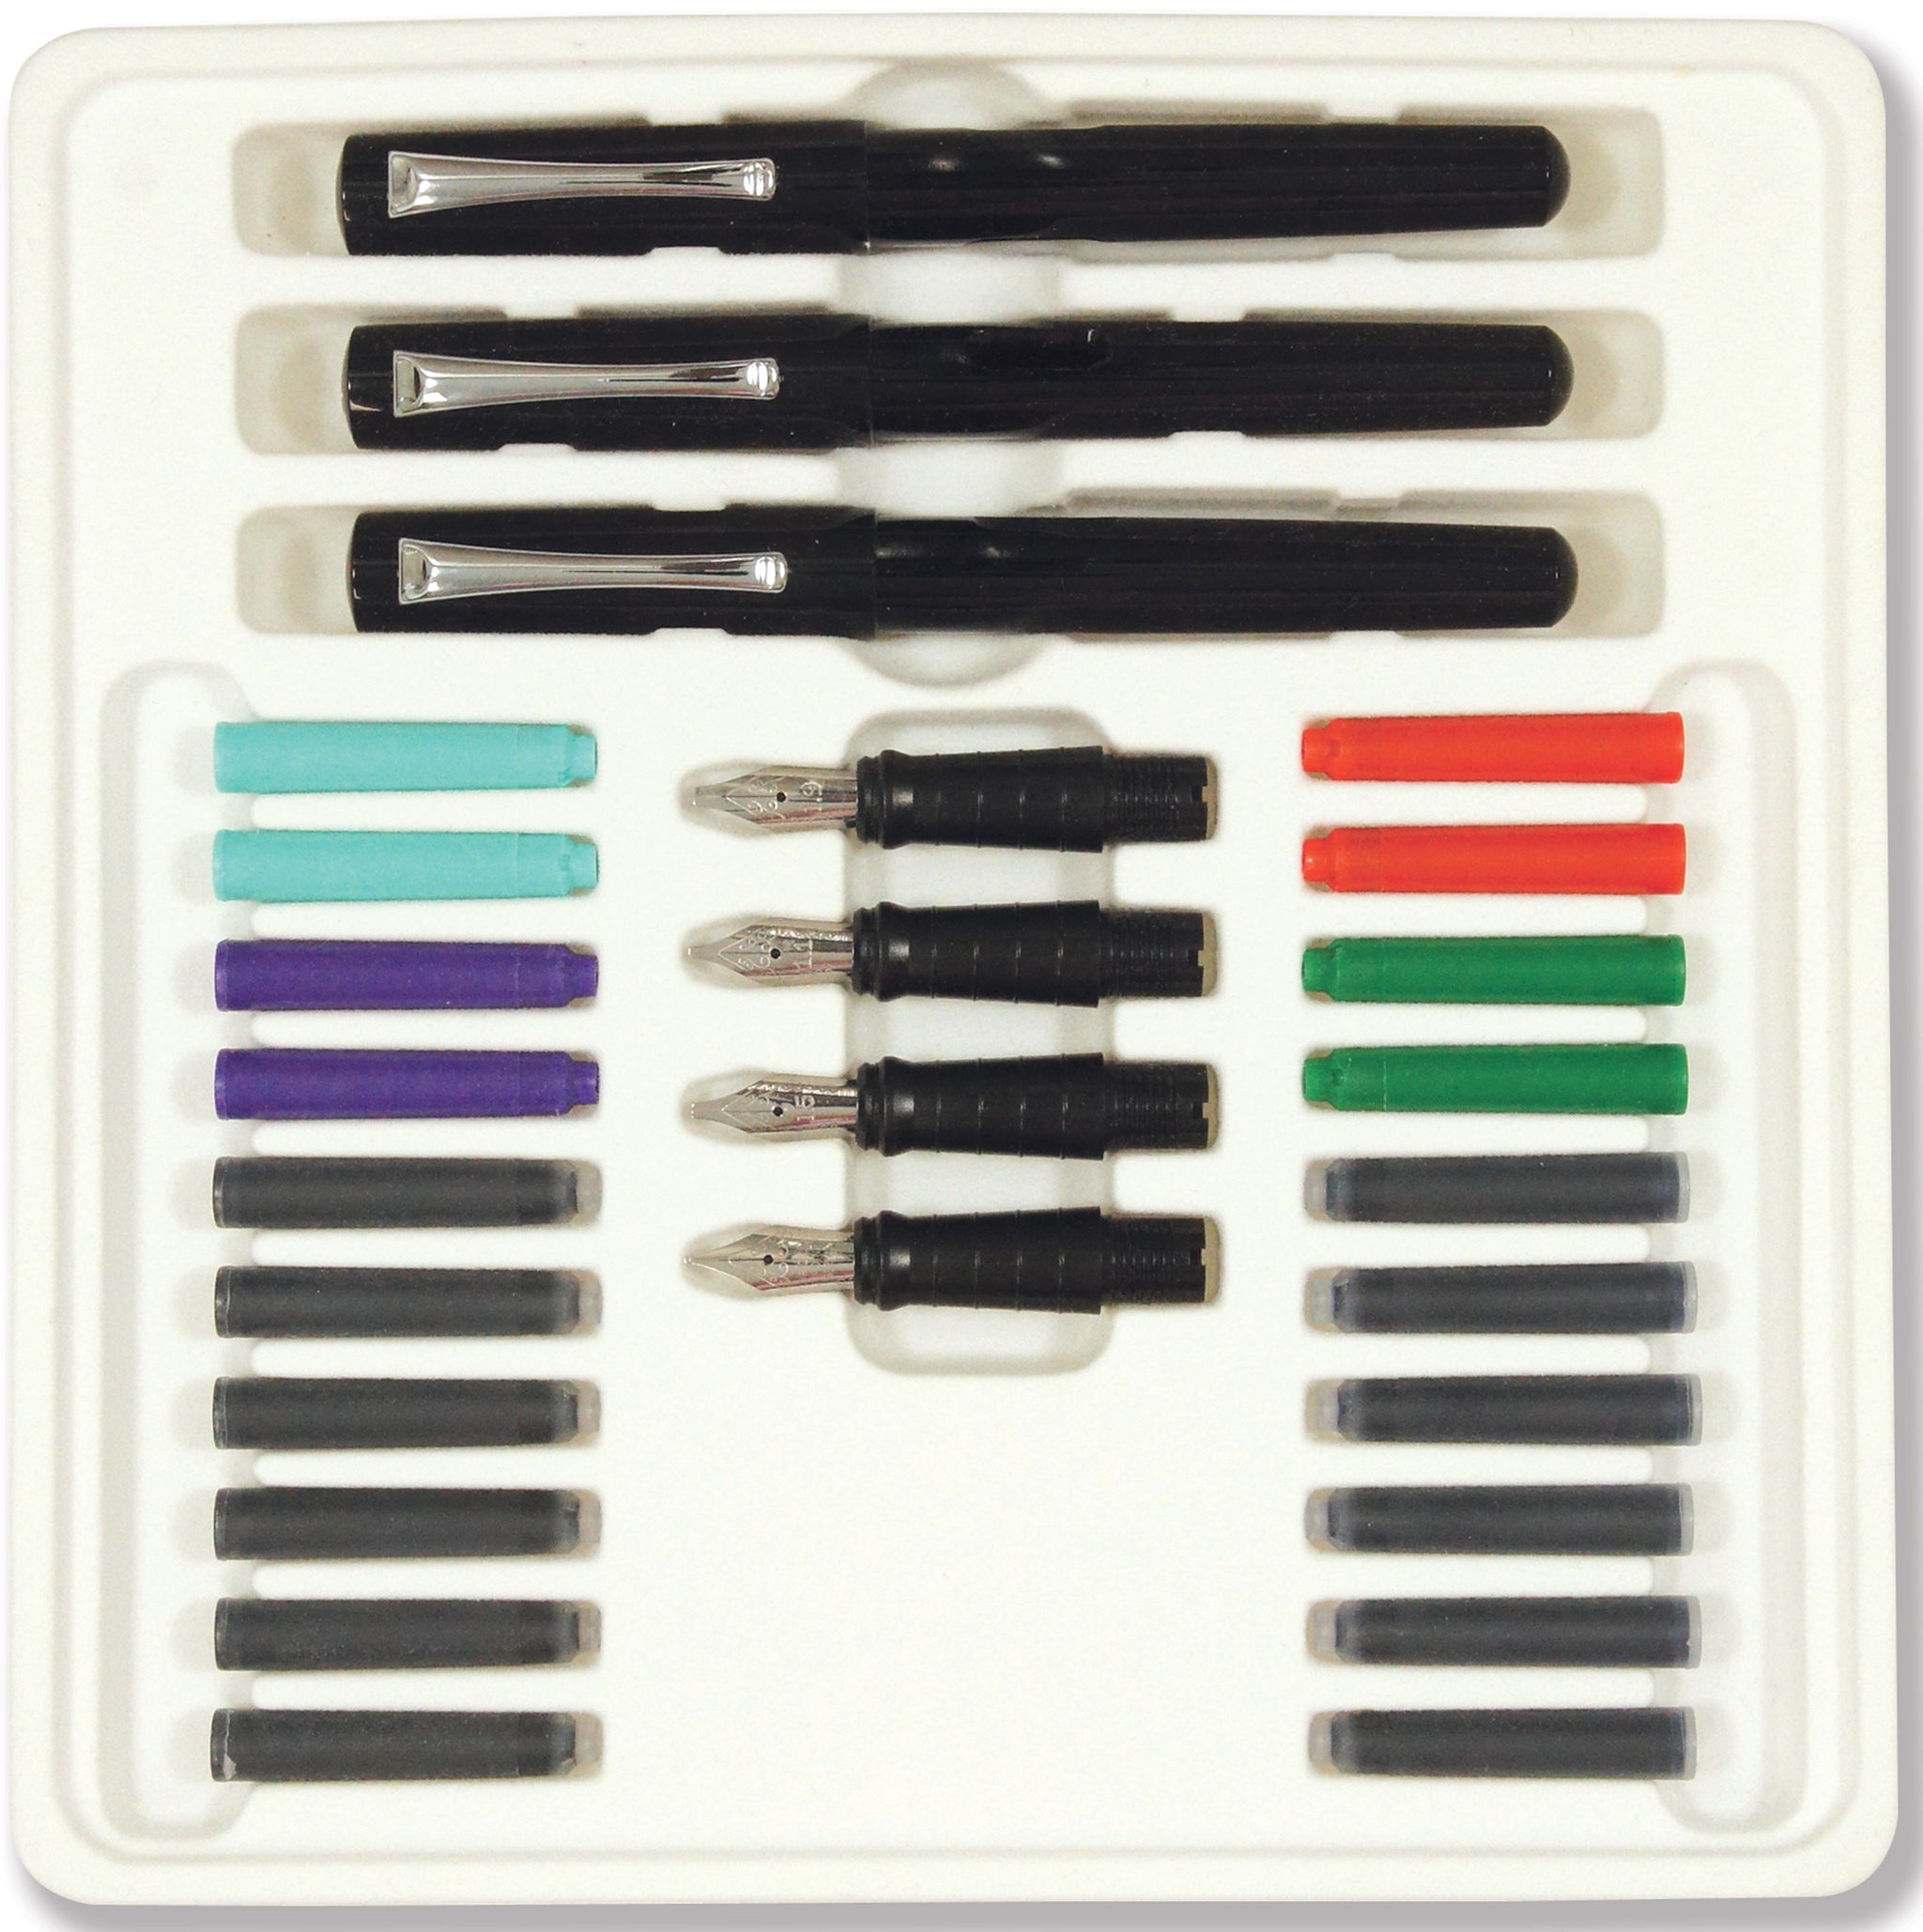 Studio Series 50-unit Deluxe Colored Pencil Set